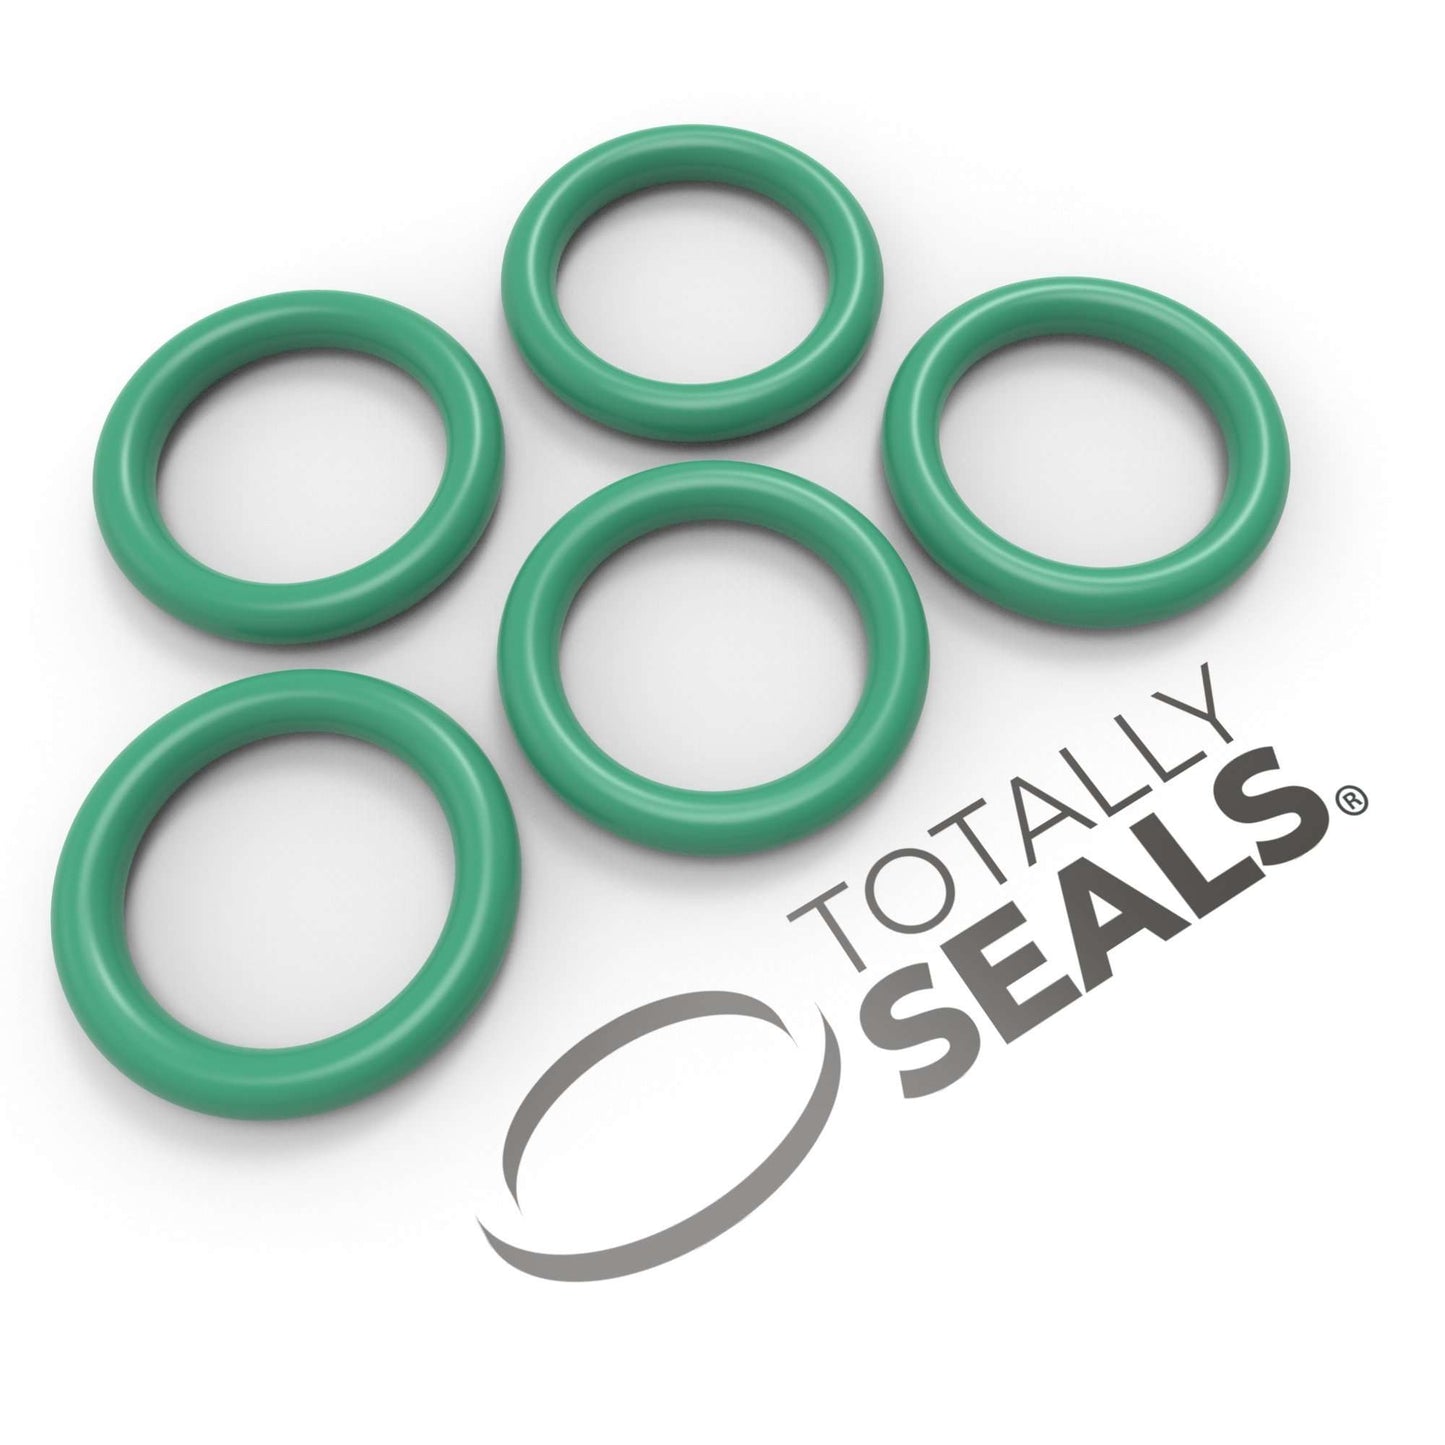 20mm x 2mm (24mm OD) FKM (Viton™) O-Rings - Totally Seals®